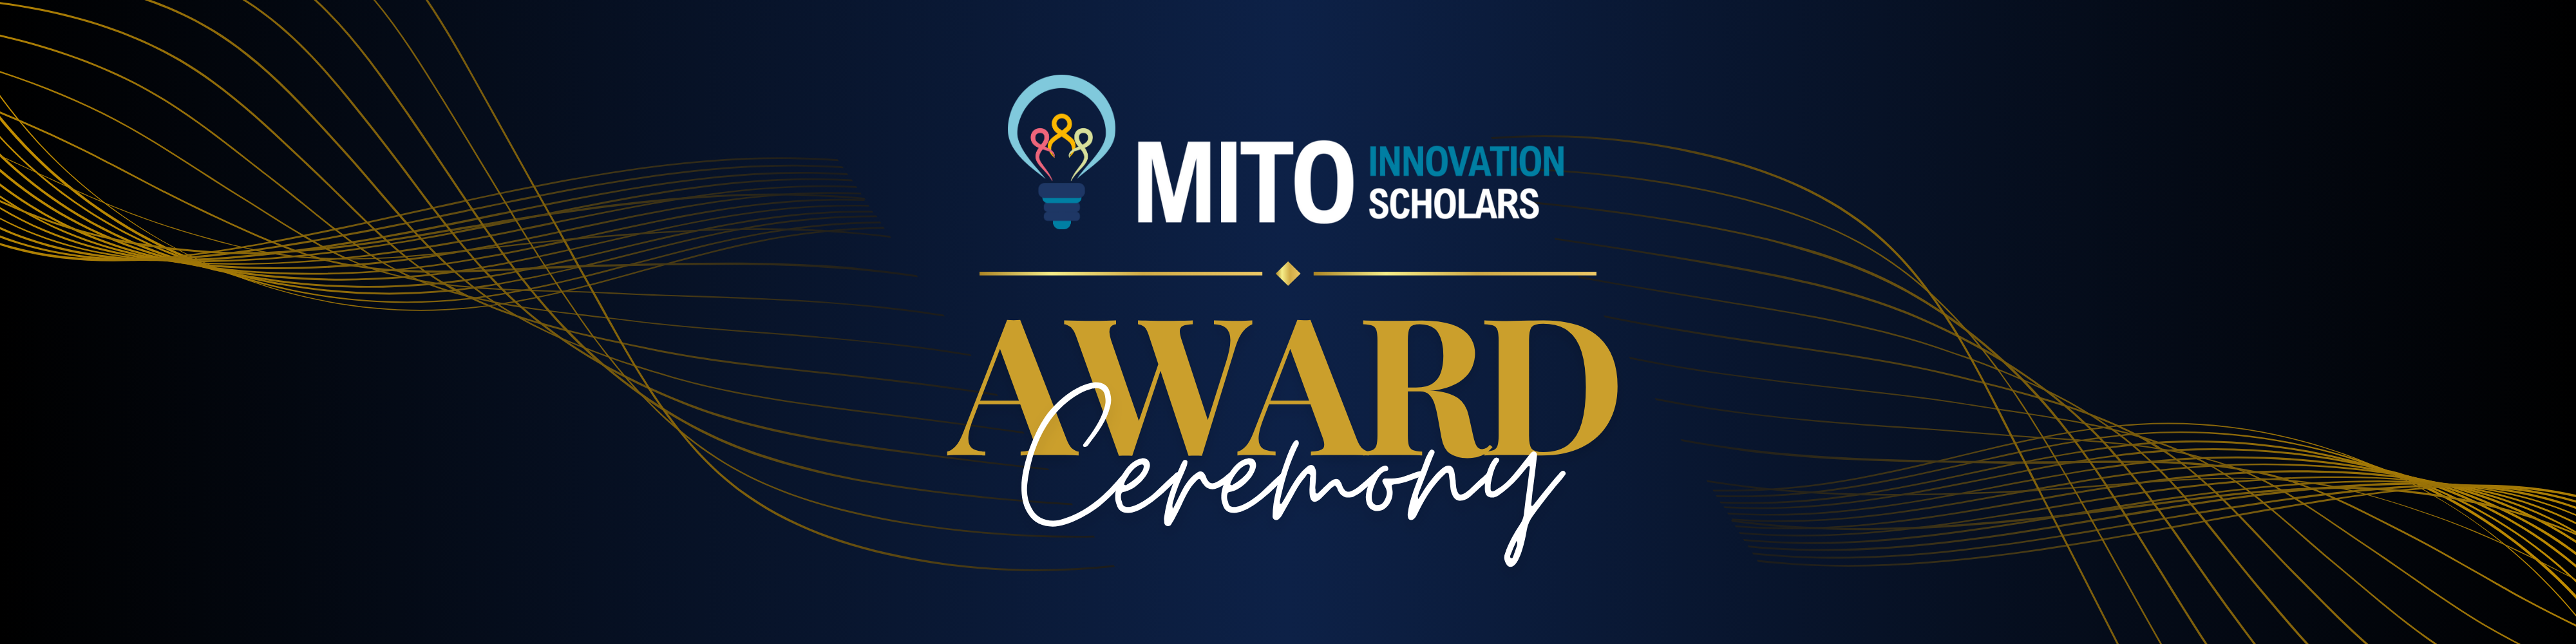 MITO Innovation Scholars Awards Ceremony